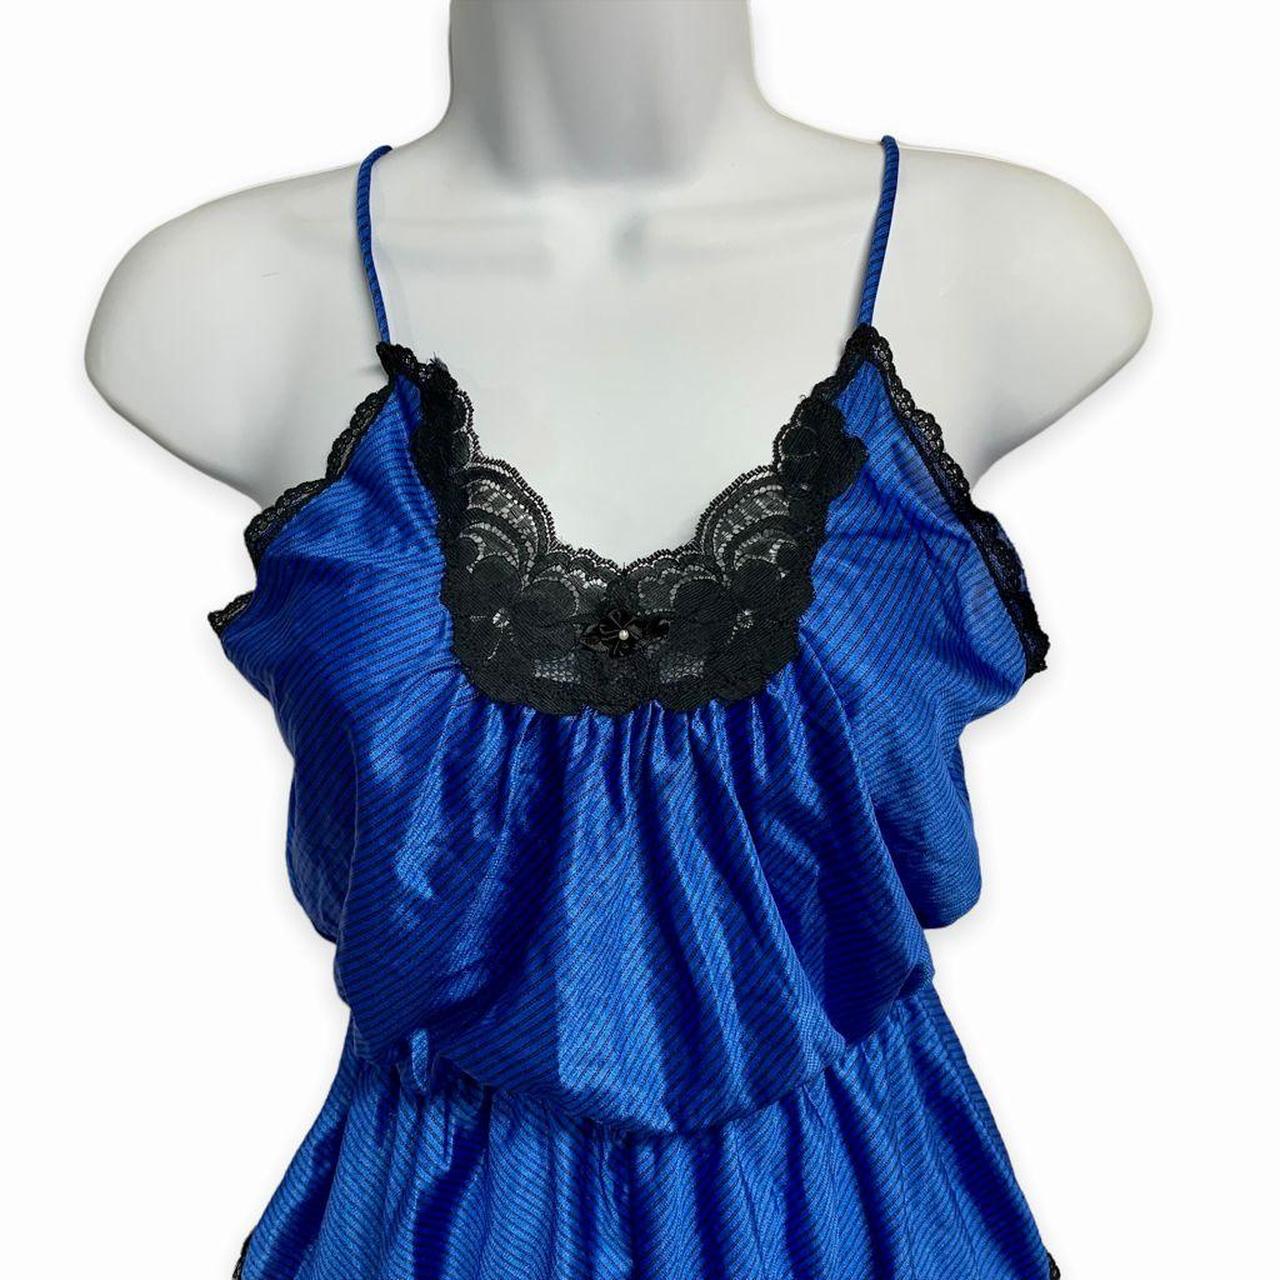 Sears Women's Blue and Black Bodysuit (3)